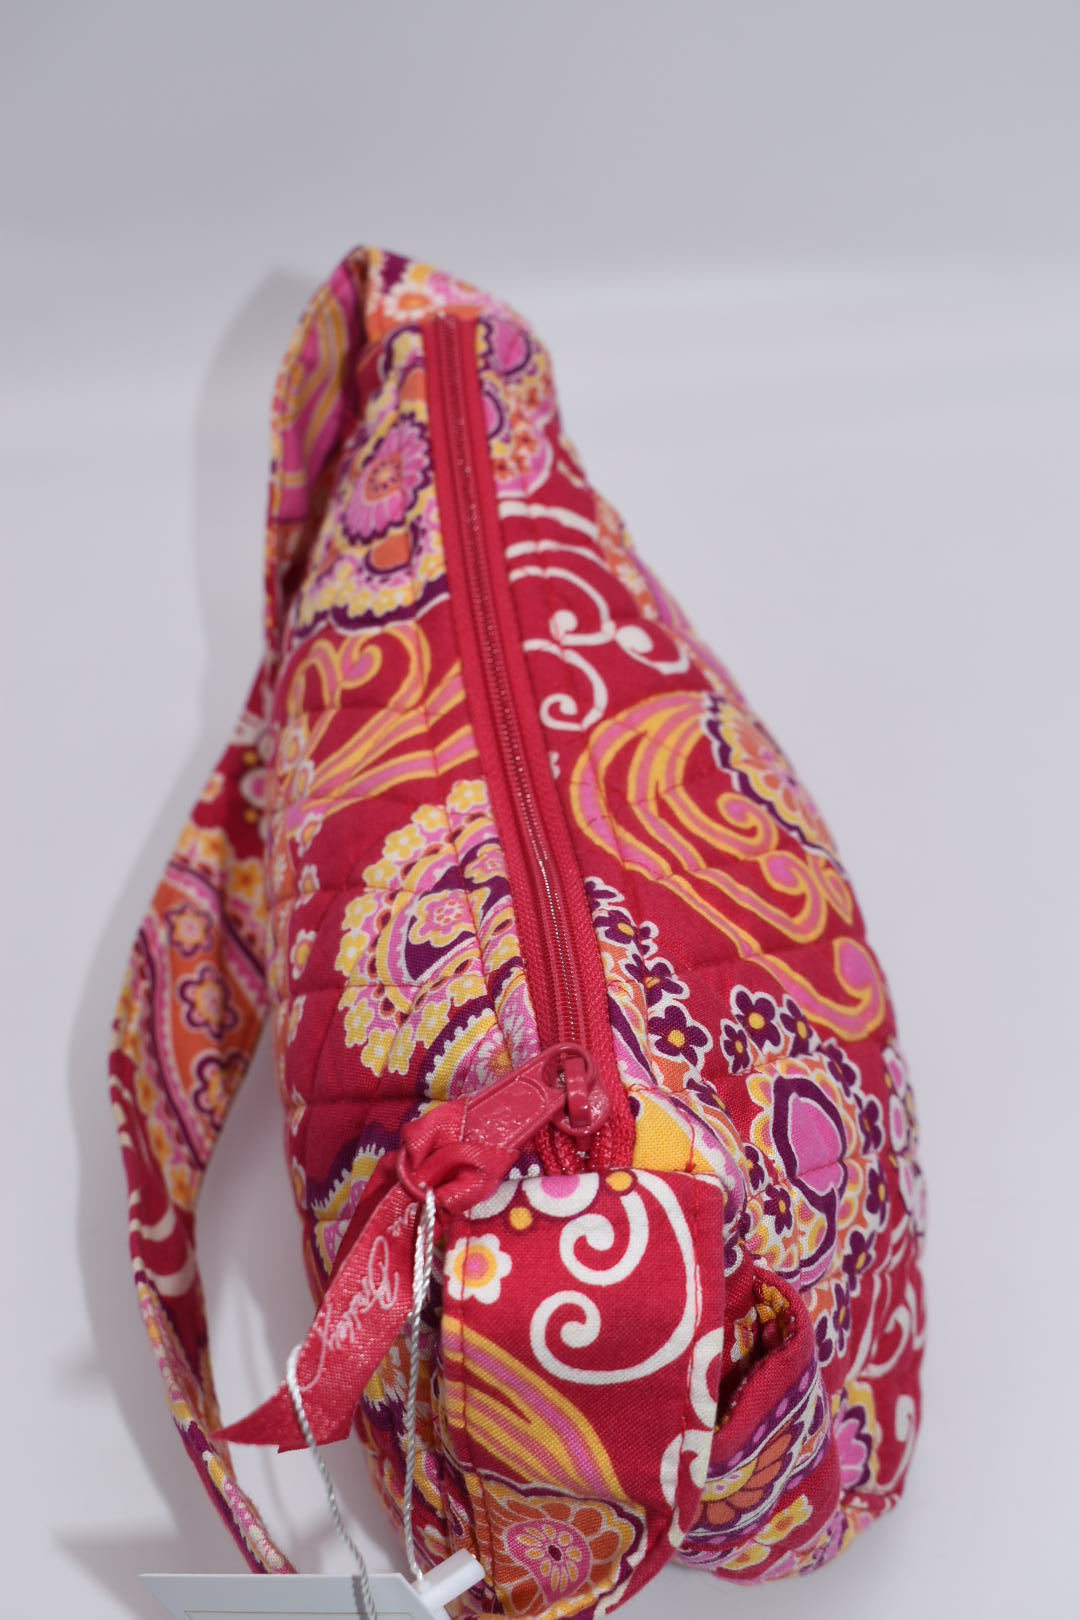 Vera Bradley Maggie Shoulder Bag in "Raspberry Fizz" Pattern